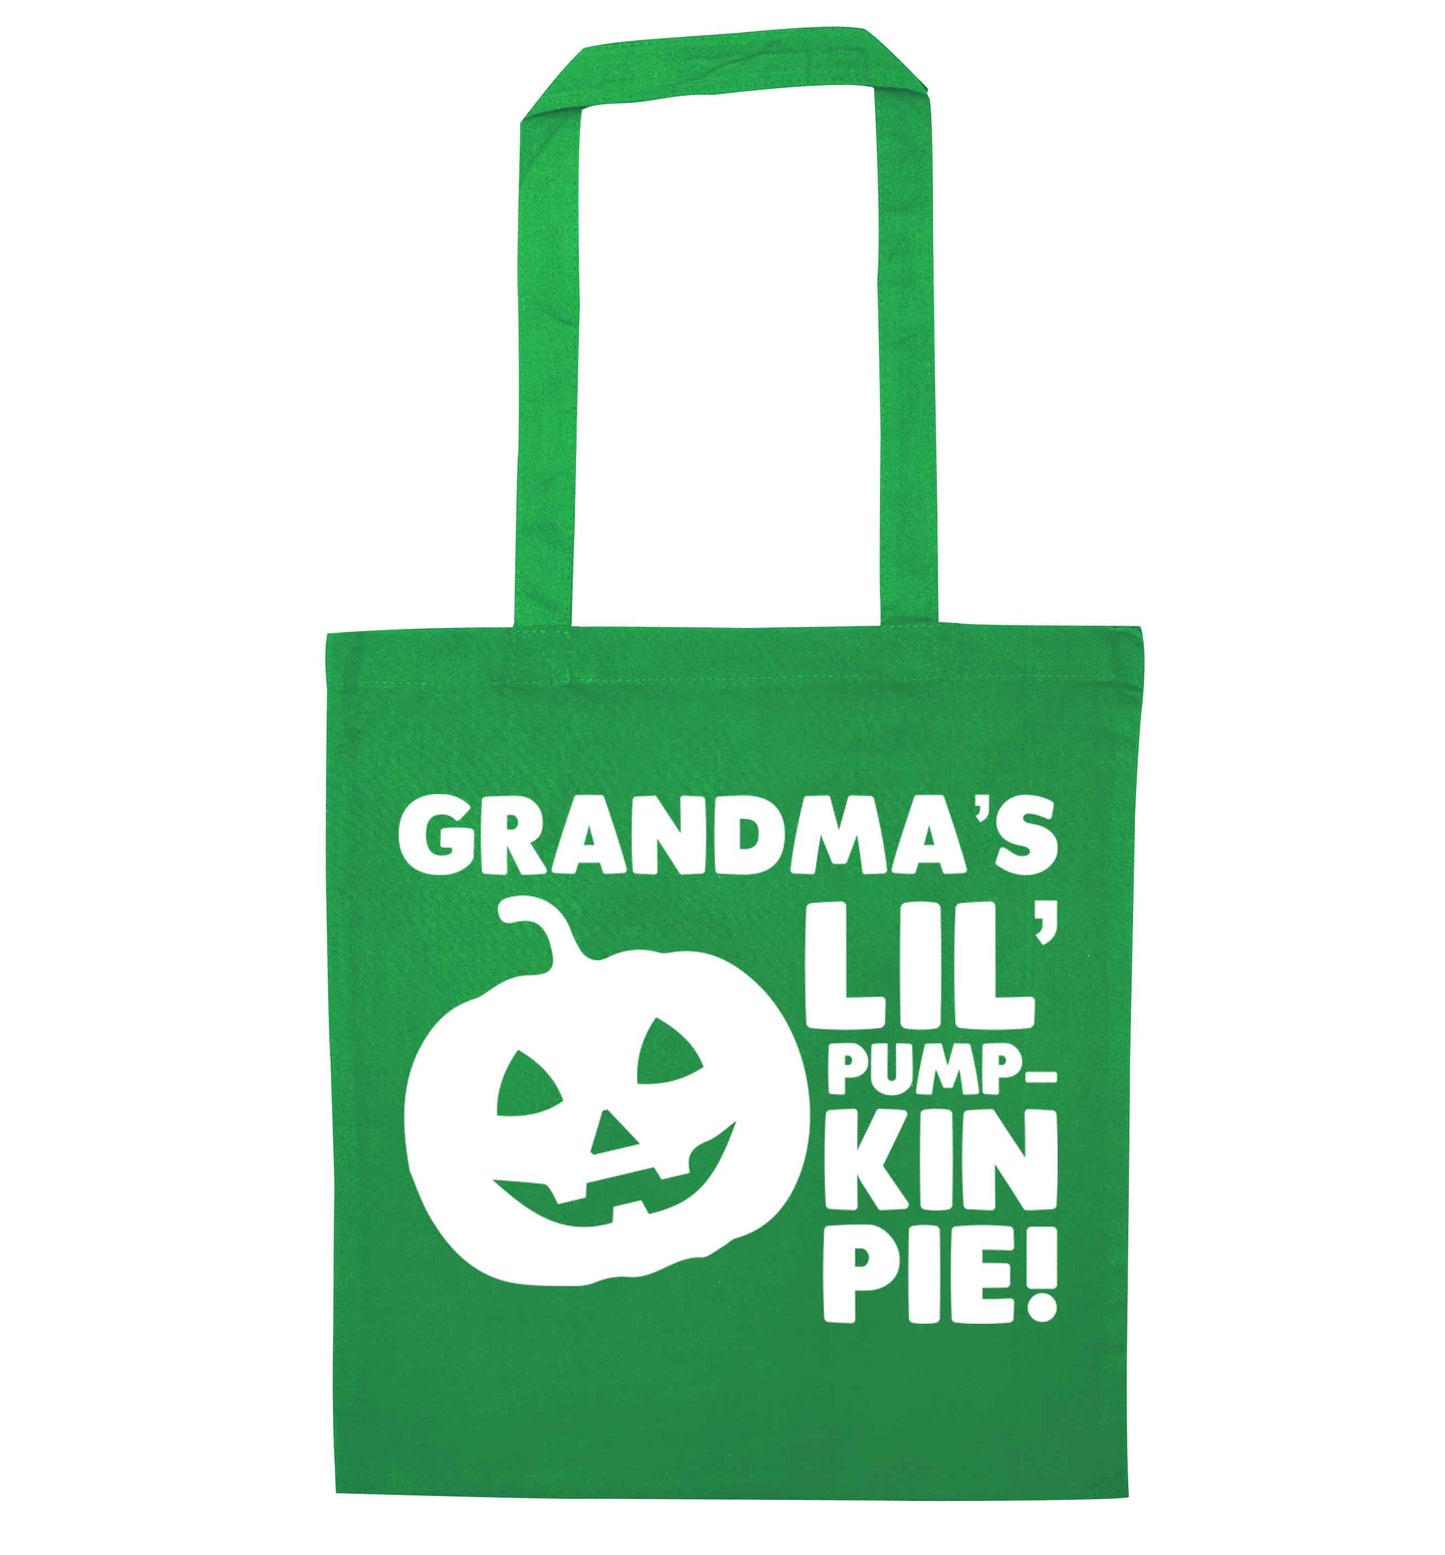 Grandma's lil' pumpkin pie green tote bag